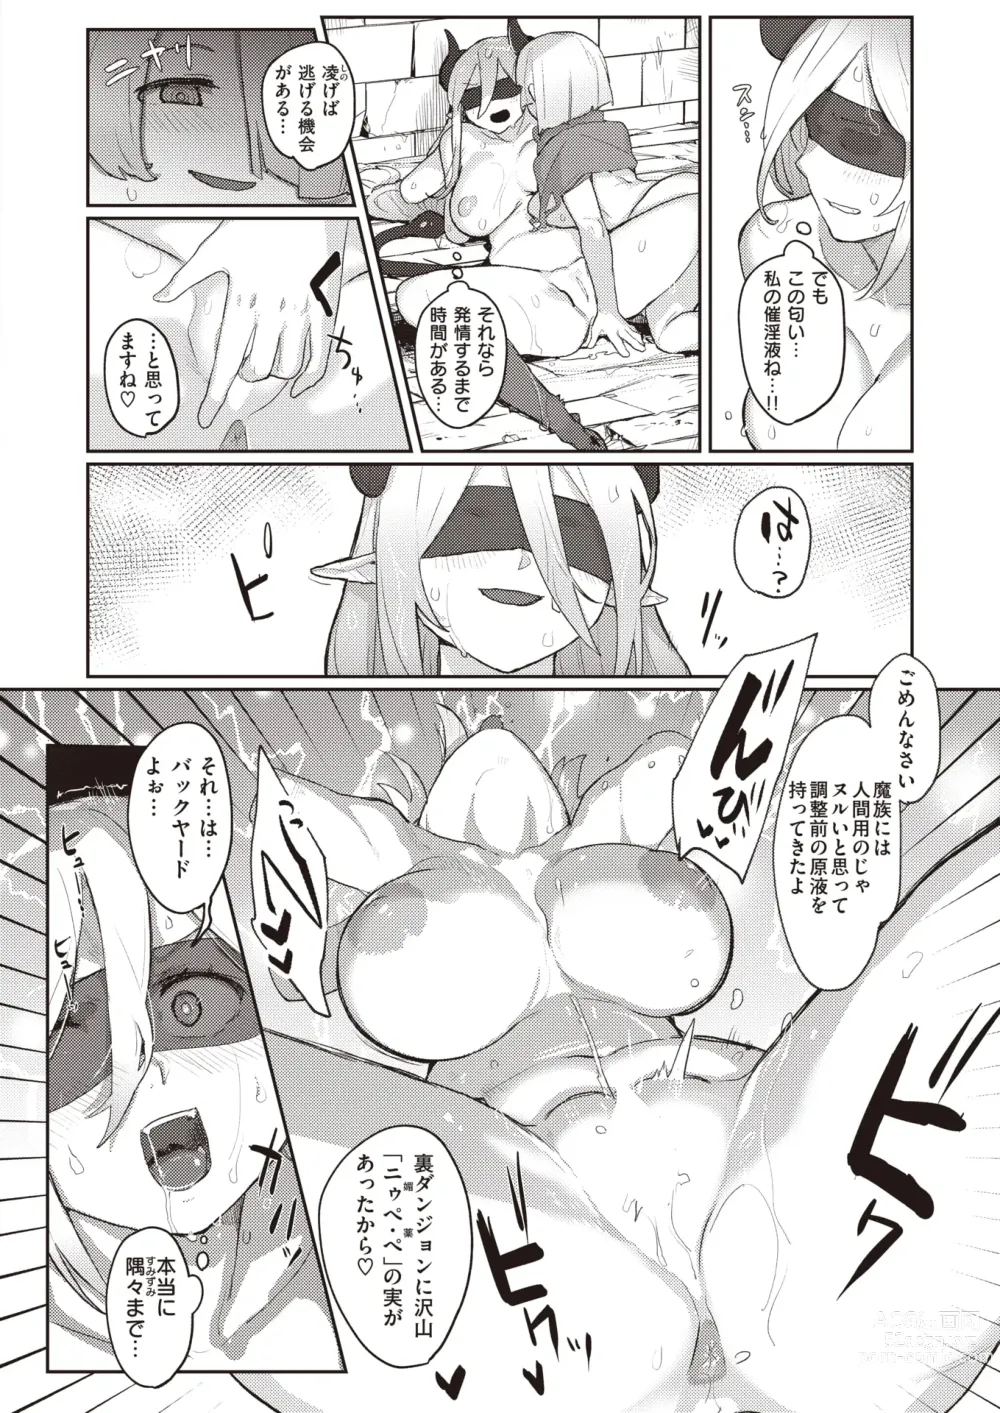 Page 69 of manga Isekai Rakuten Vol. 24